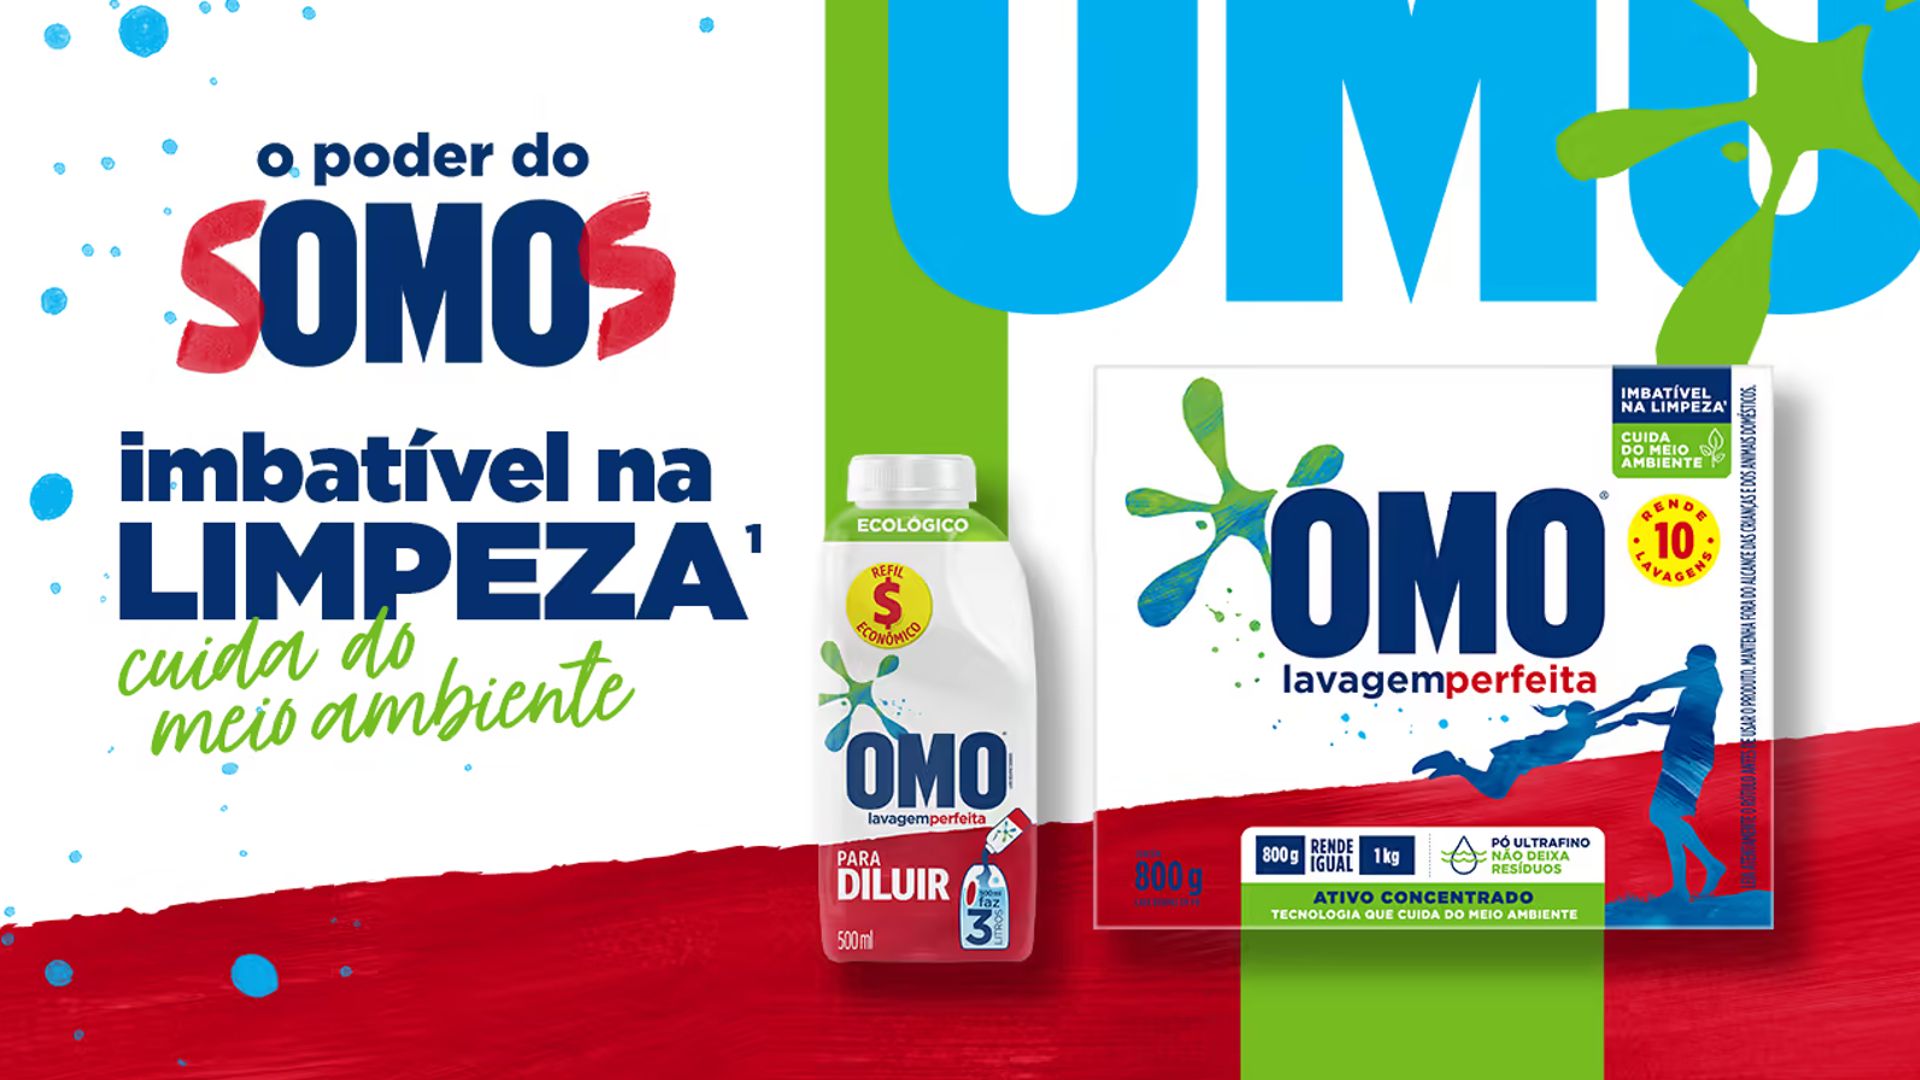 Omo feature- Brazil